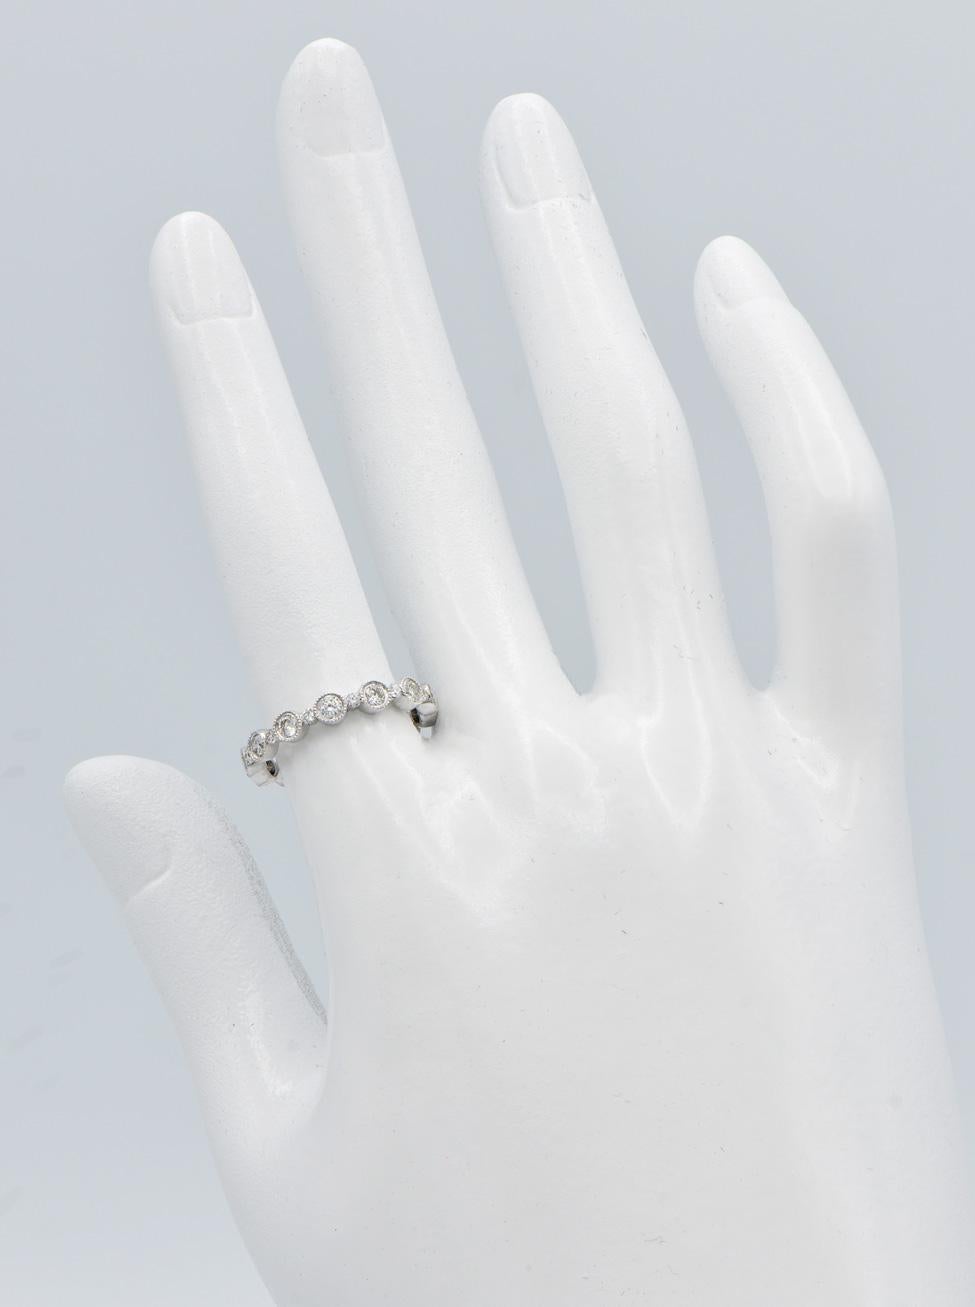 Round Cut Diamond Bezel Set Alternate Ring For Sale